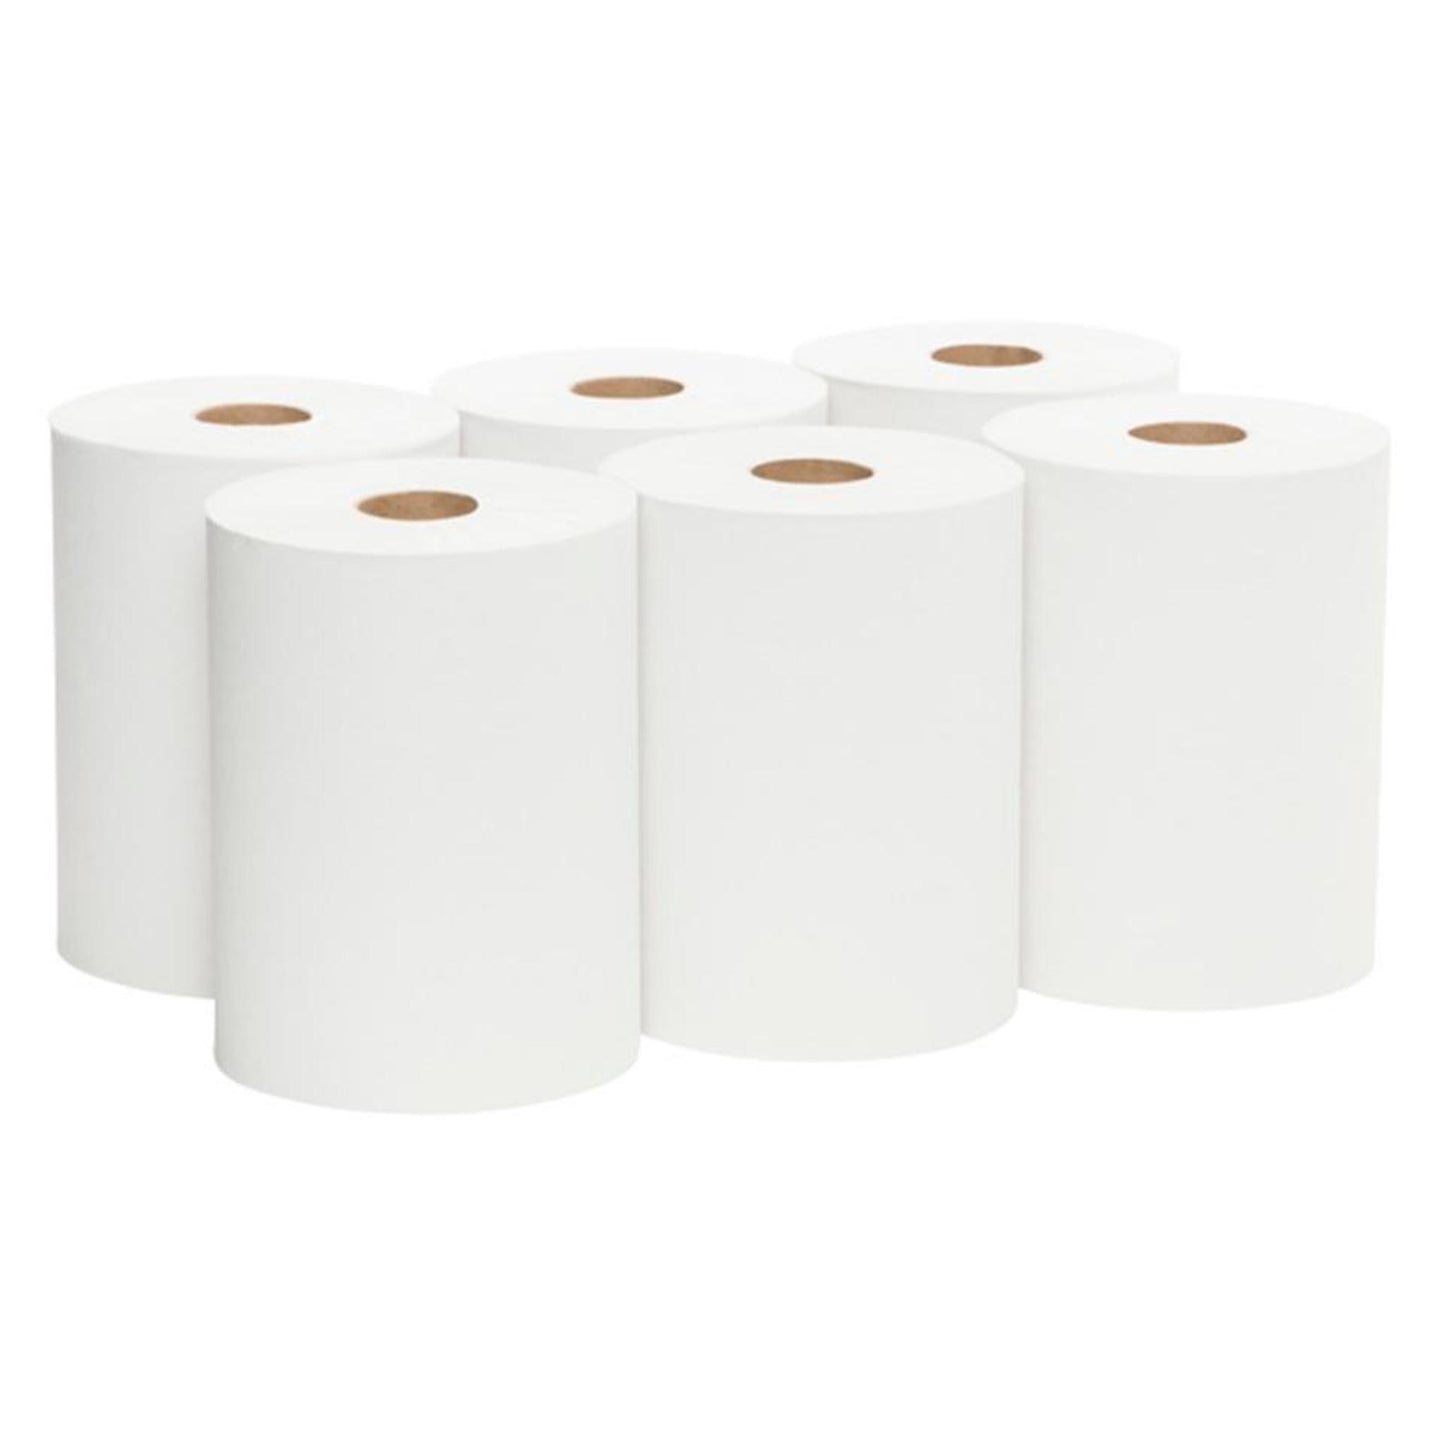 Scott 12388 Slimroll Paper Hand Towel 176m White - Carton (6 x 176m Roll)